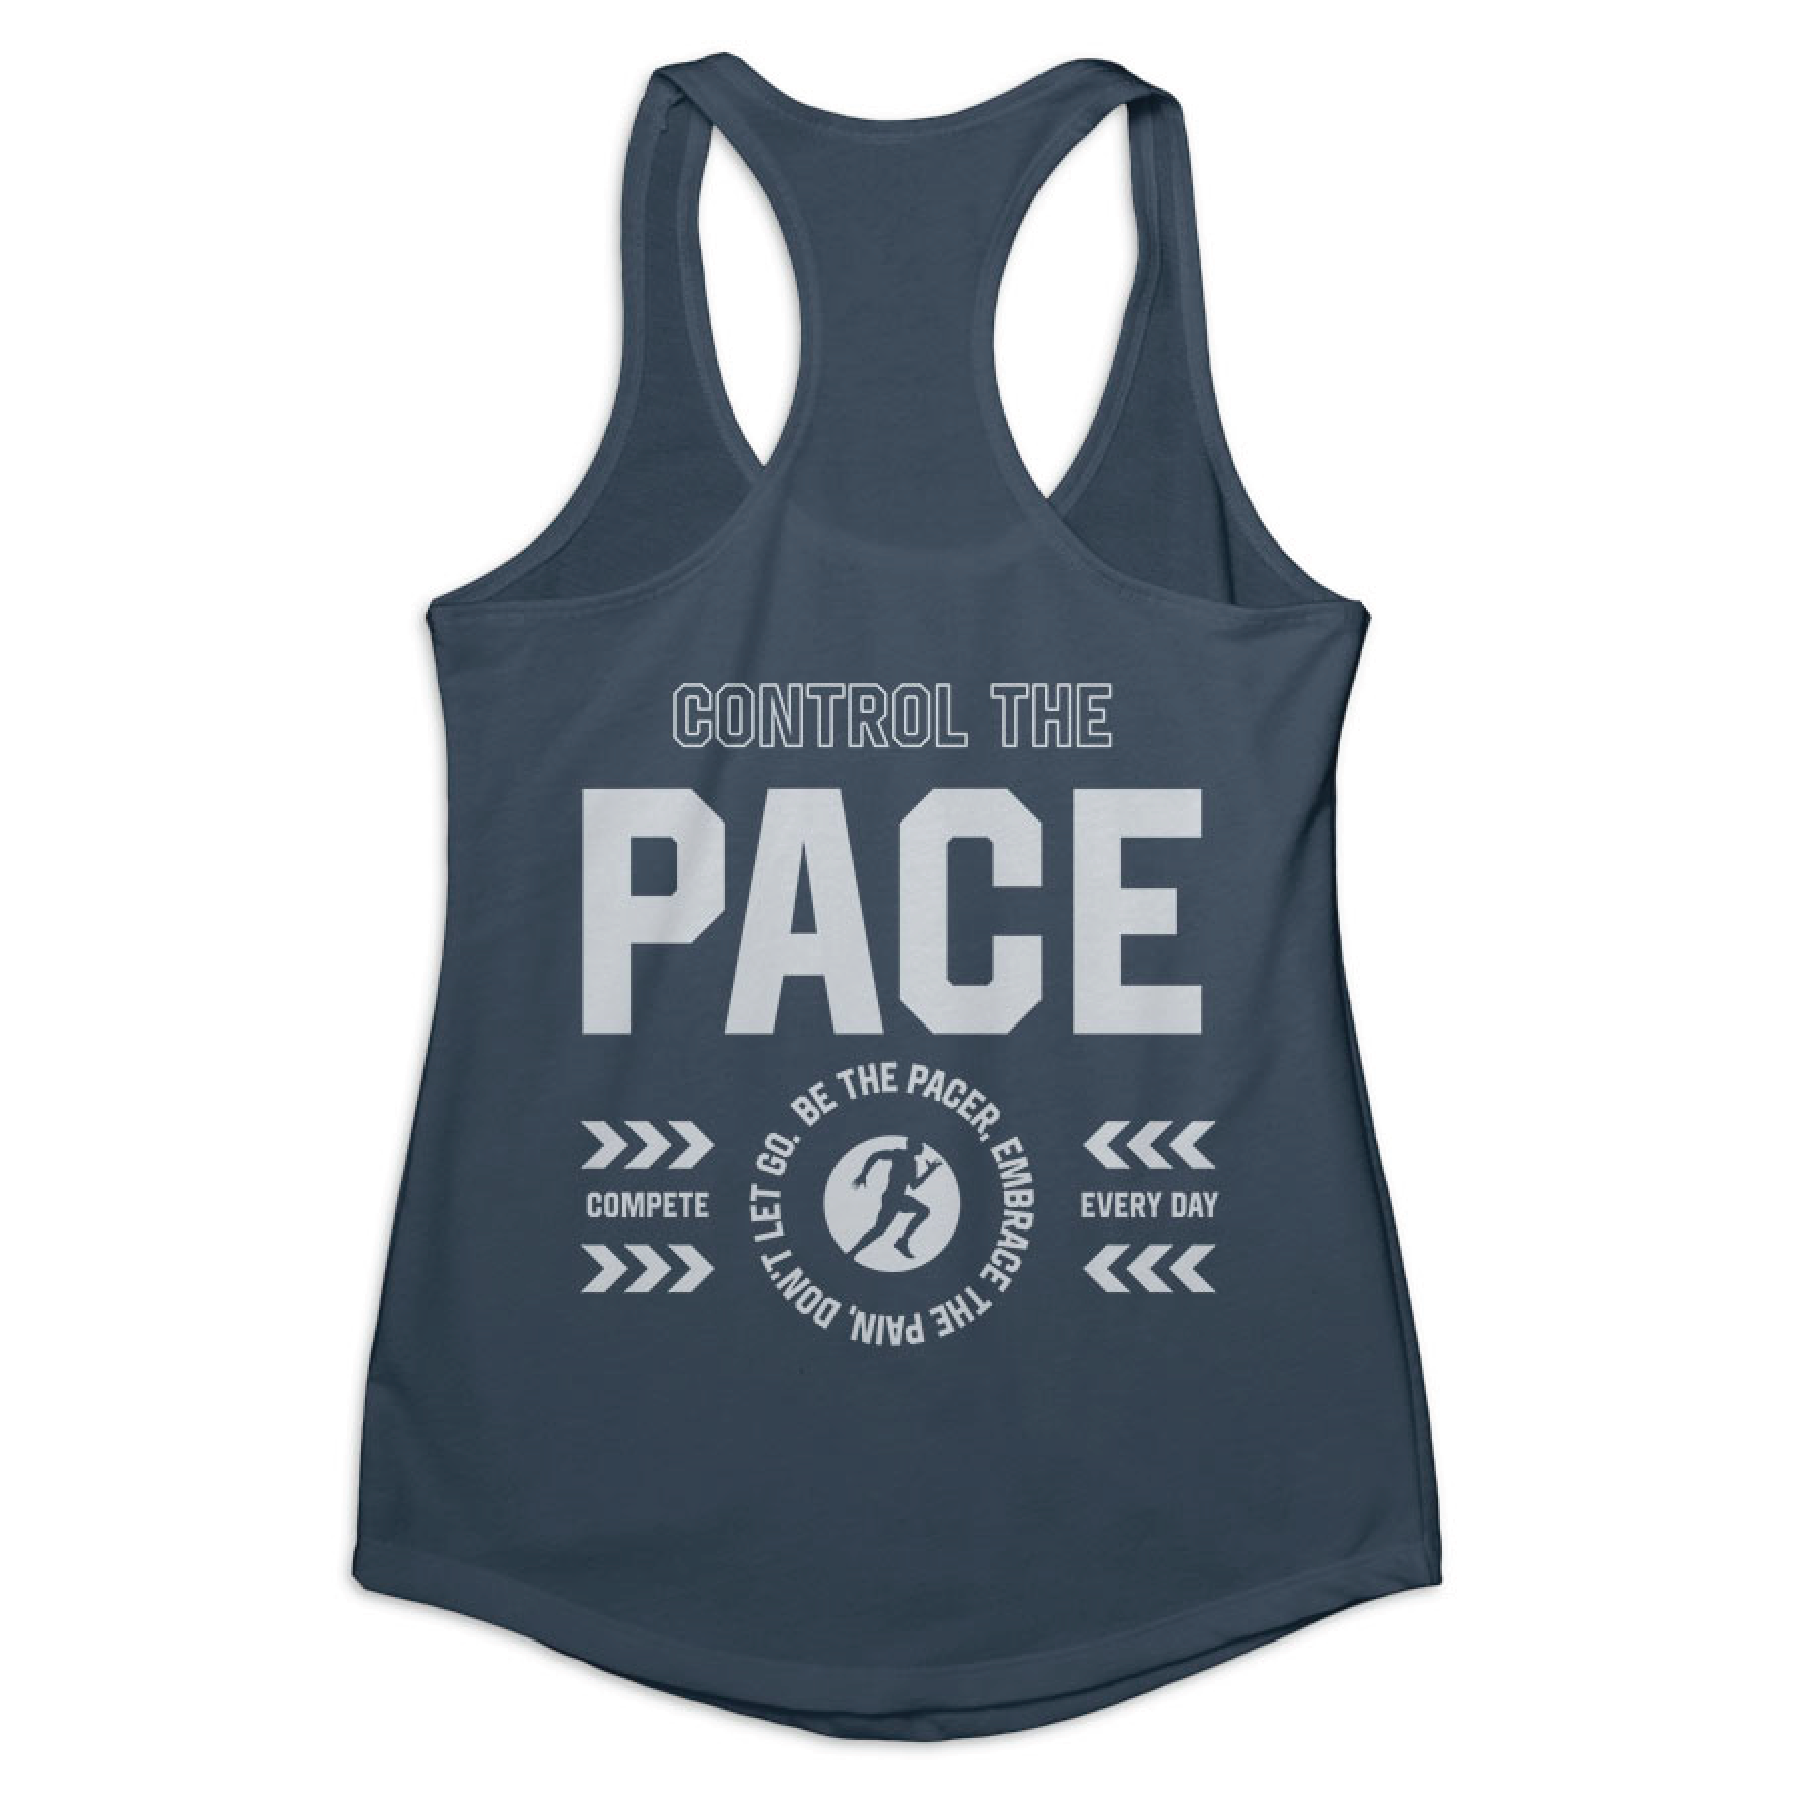 Set The Pace Women's Indigo Racerback Tank